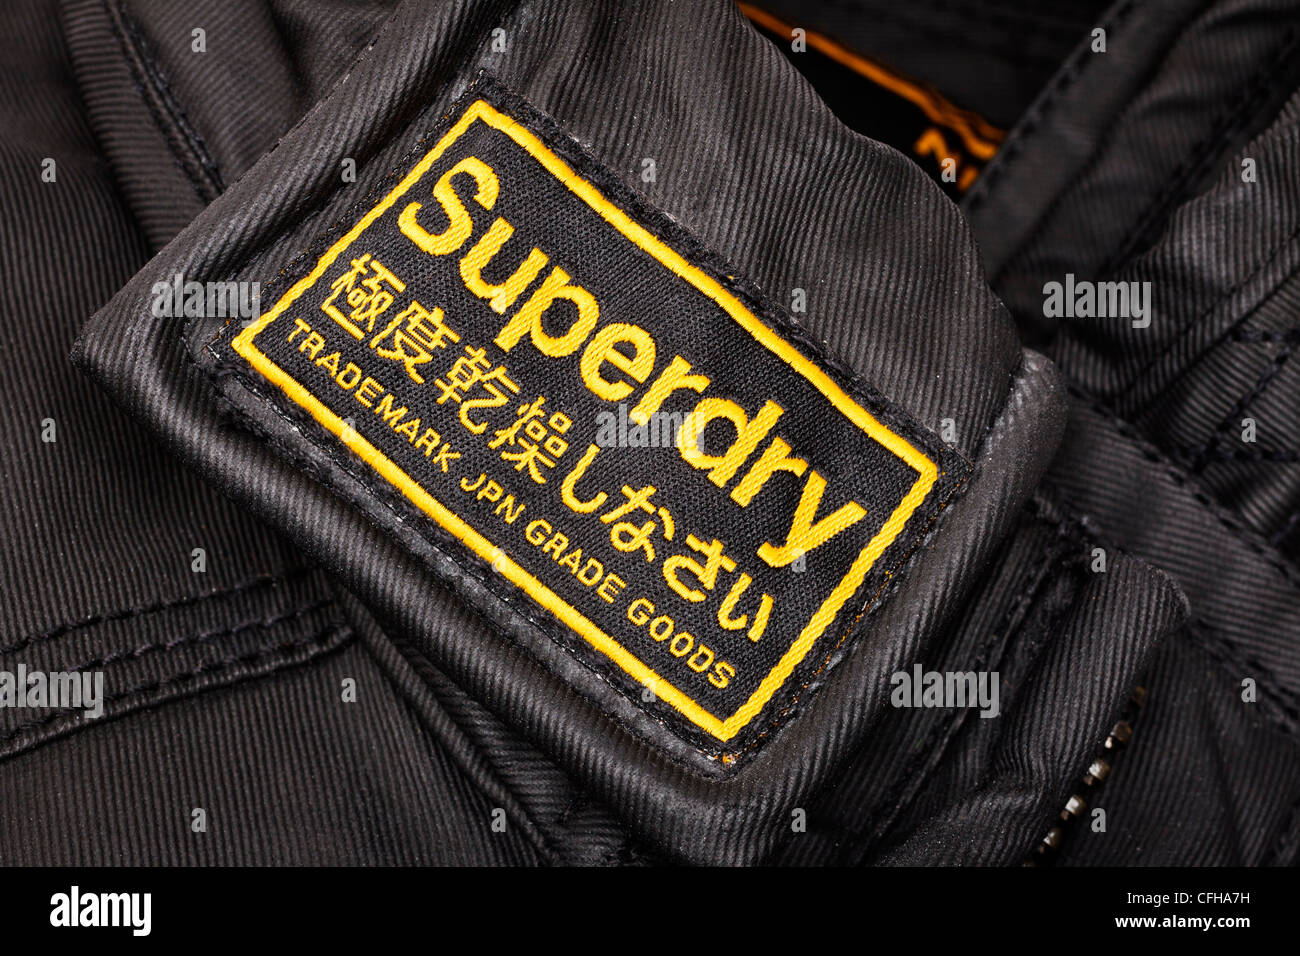 Superdry ropa de marca etiqueta Foto de stock